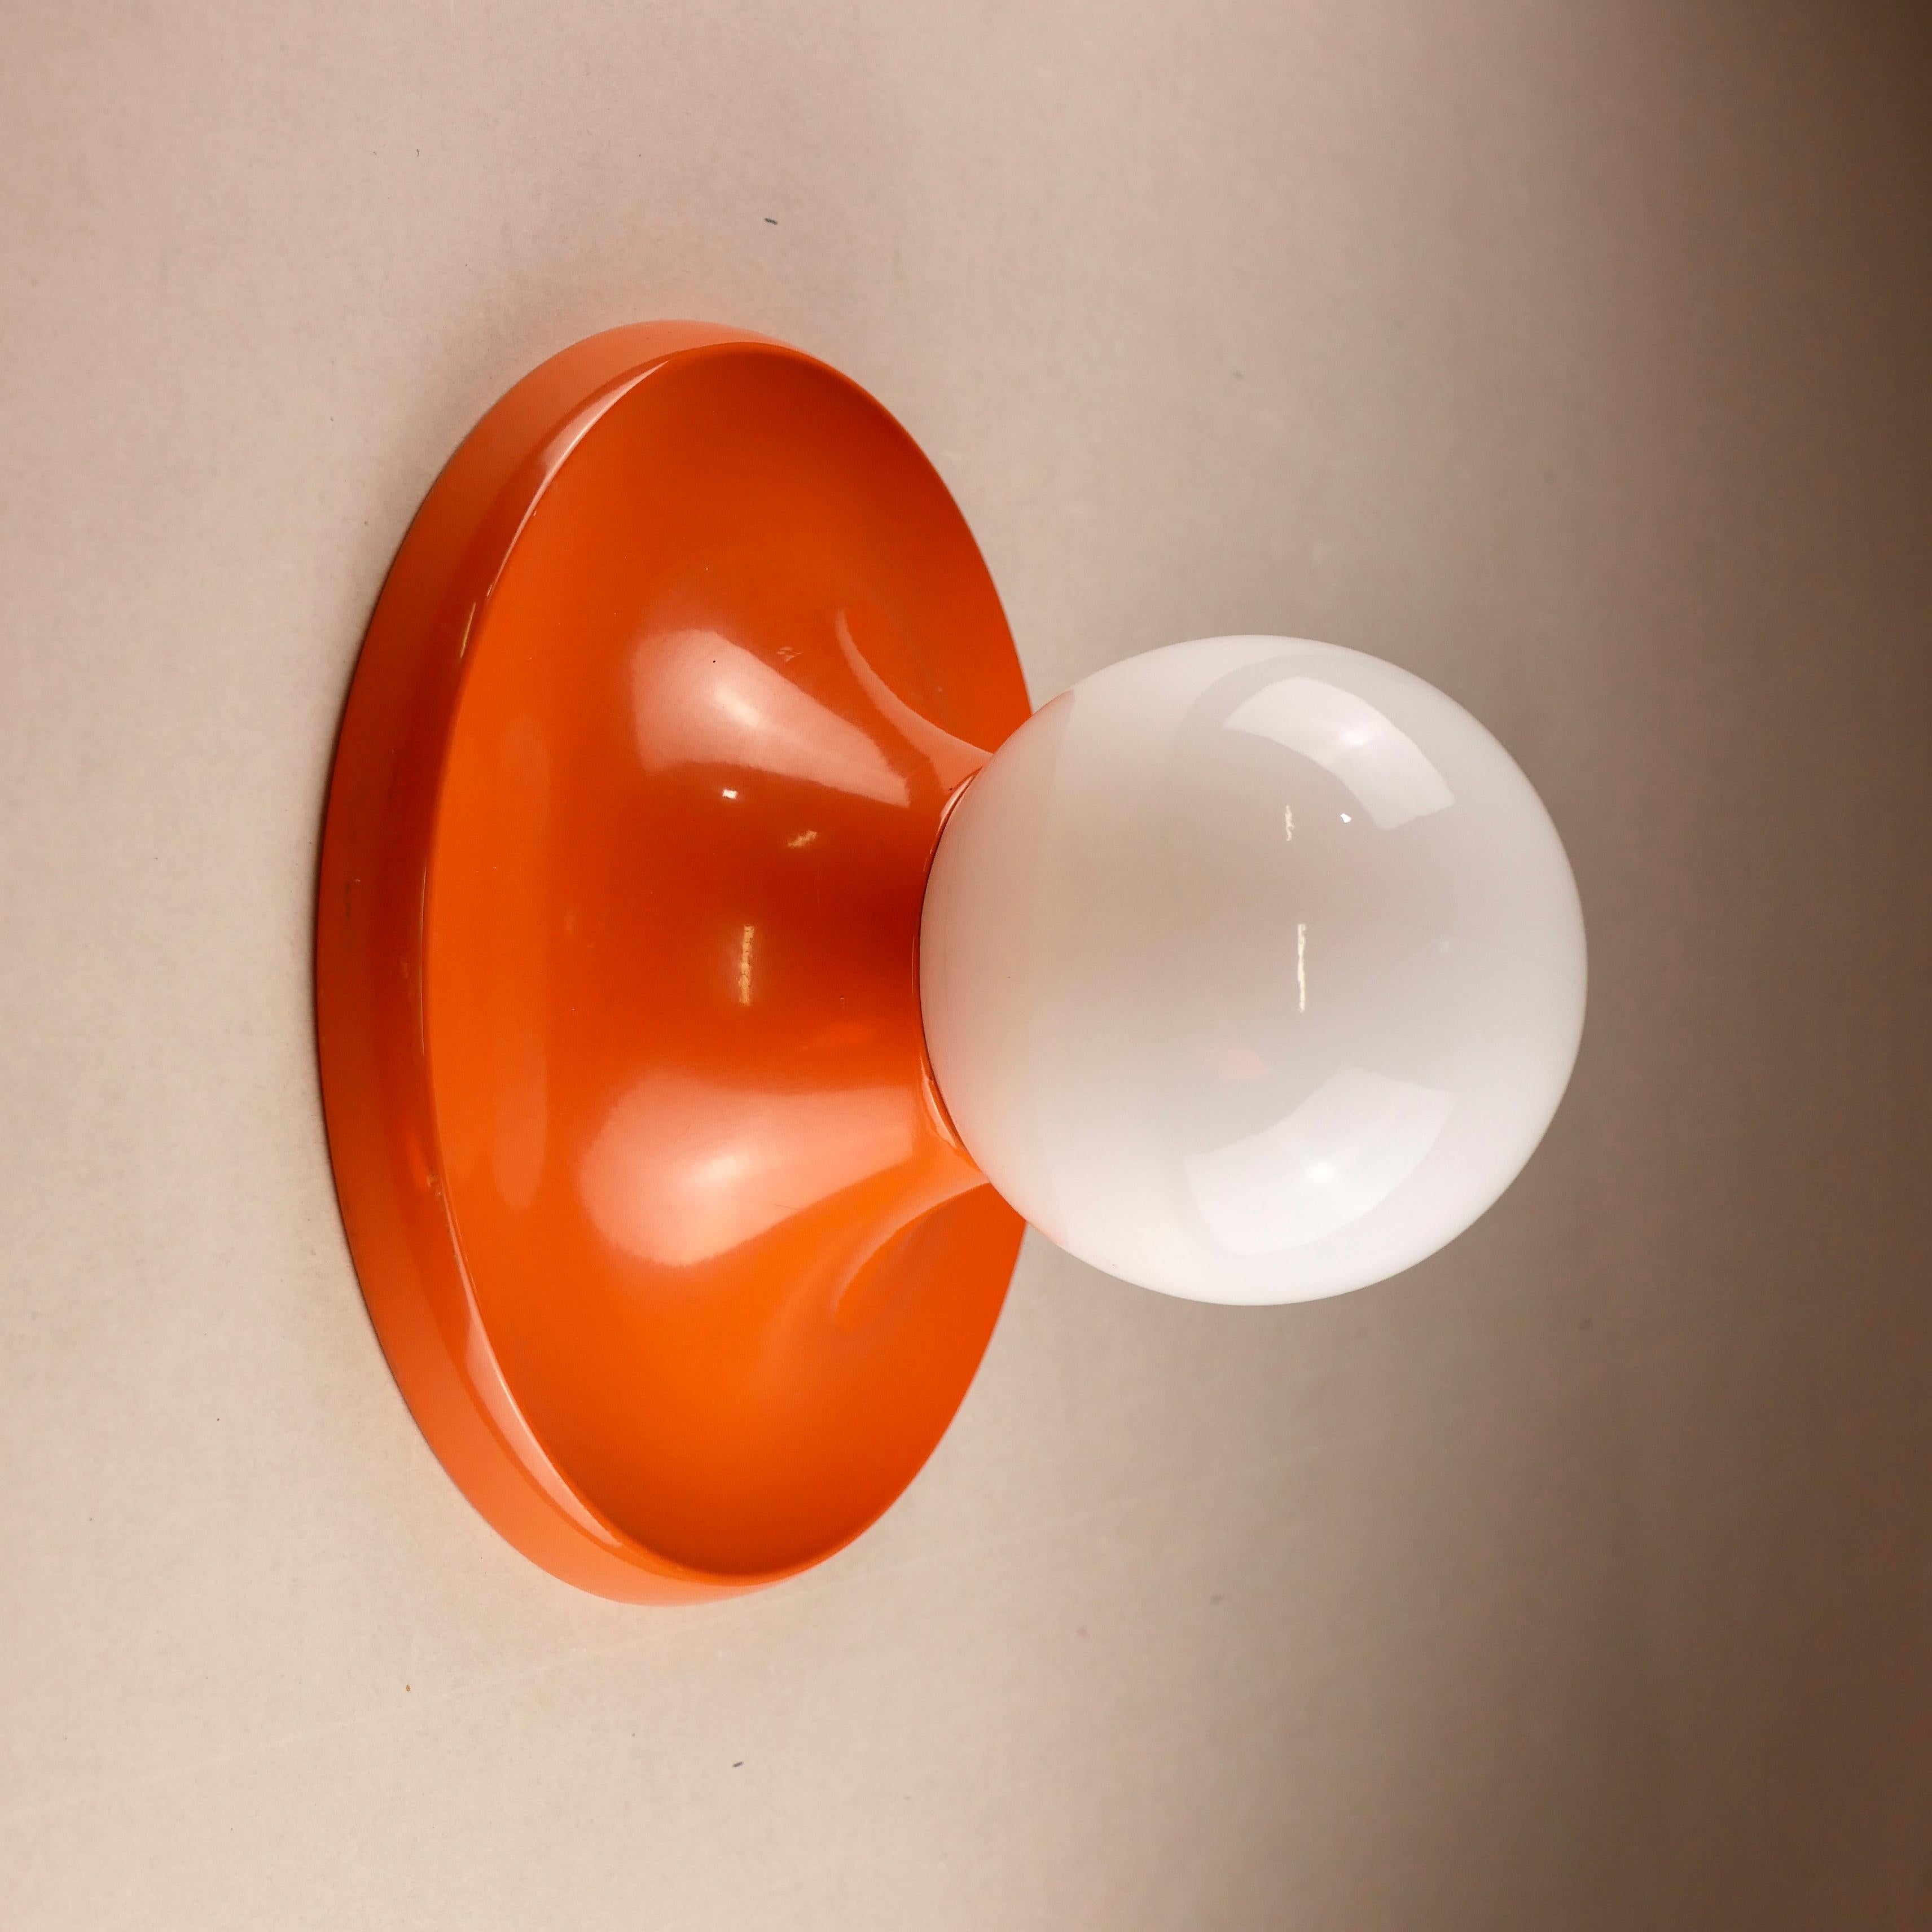 Italian Set of 4 Orange Wall Lamps 'Light Ball' by Castiglioni for Arteluce Flos